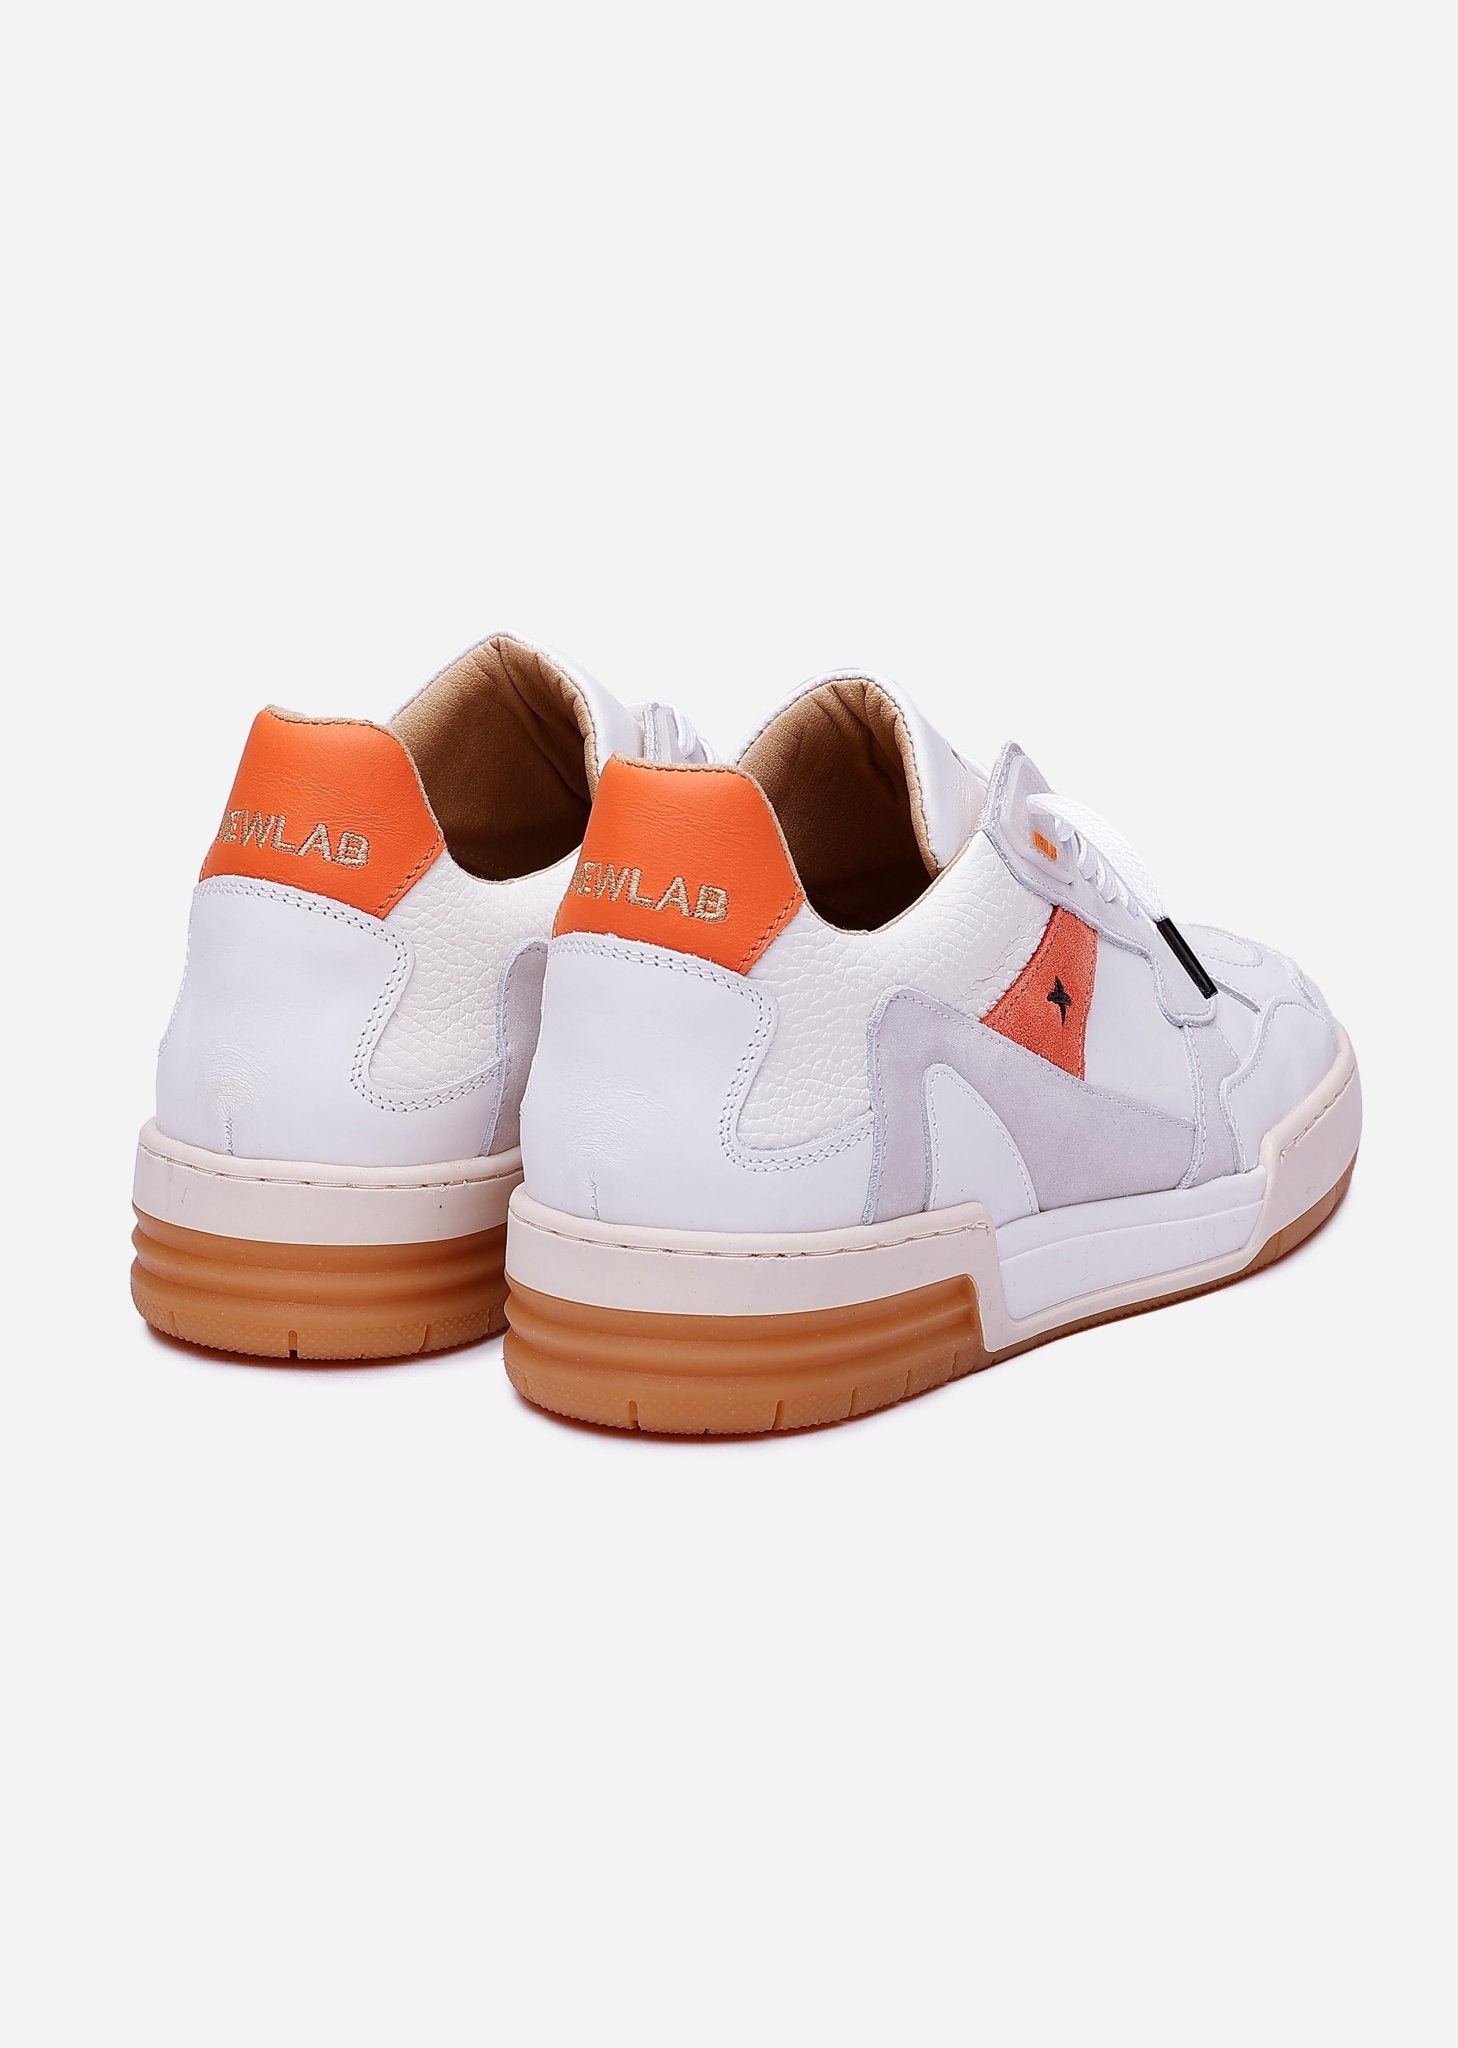 BASKET White/Orange - NEWLAB - Chaussures - NEWLAB